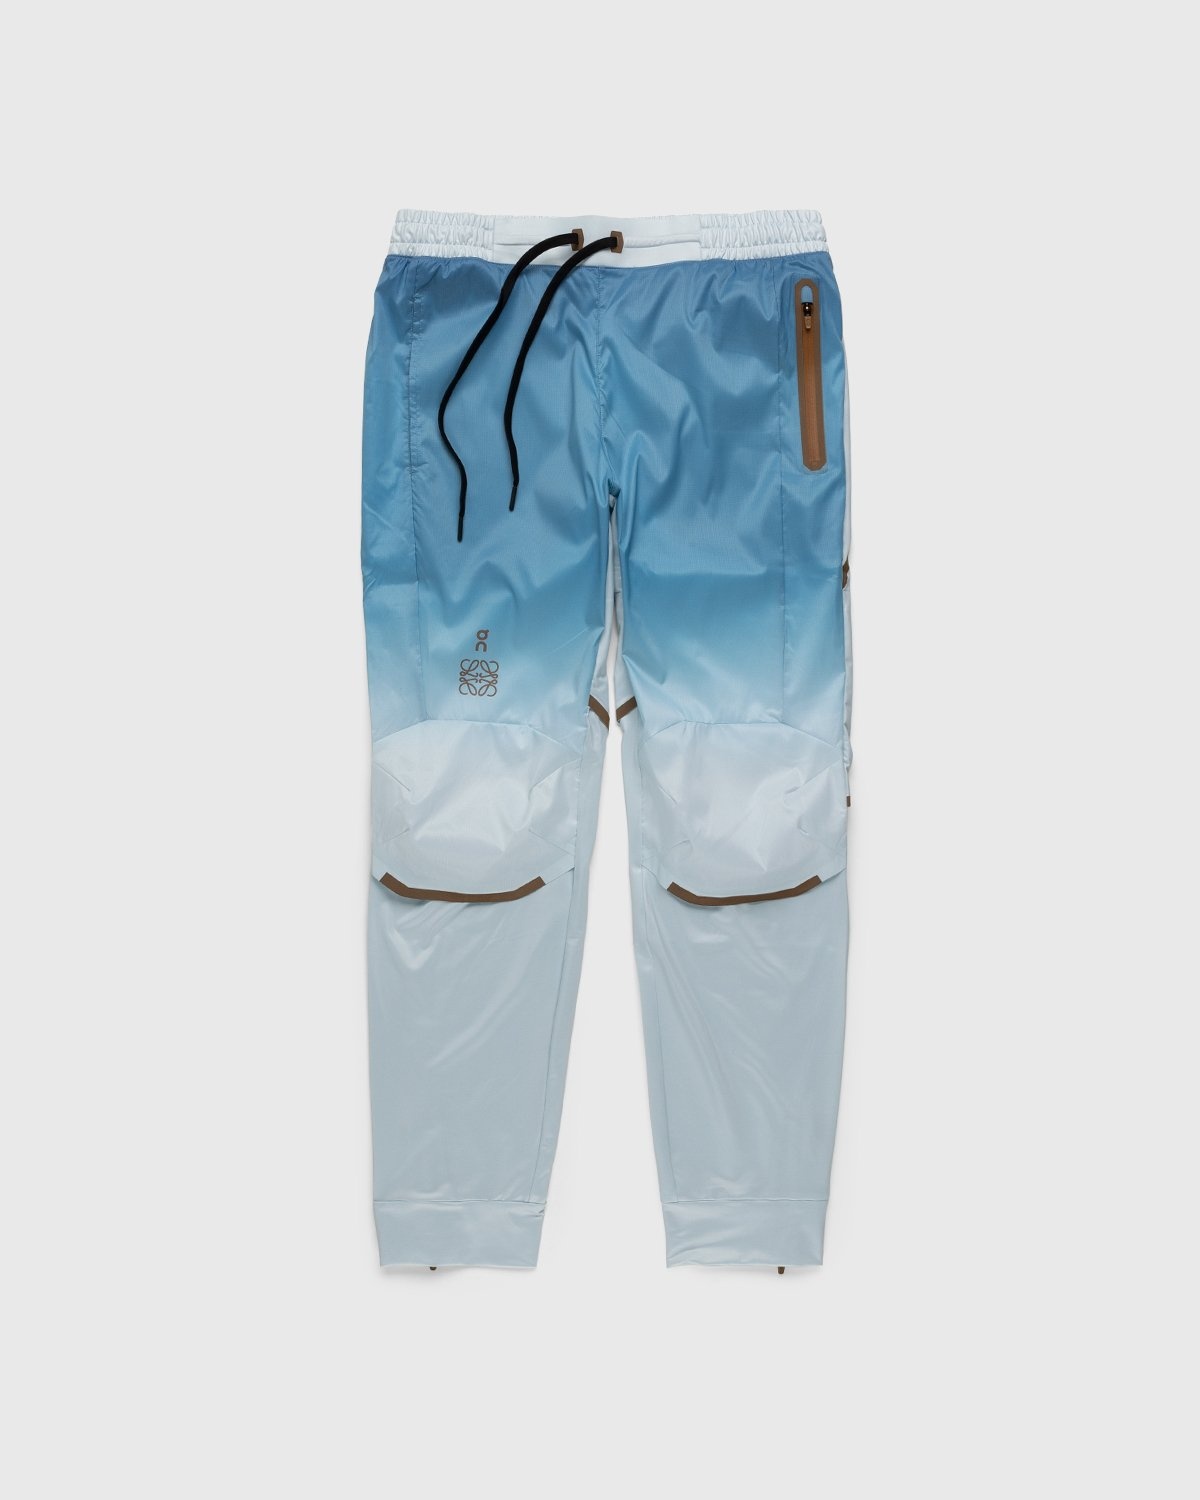 Loewe x On – Men's Technical Running Pants Gradient Grey - Active Pants - Blue - Image 1